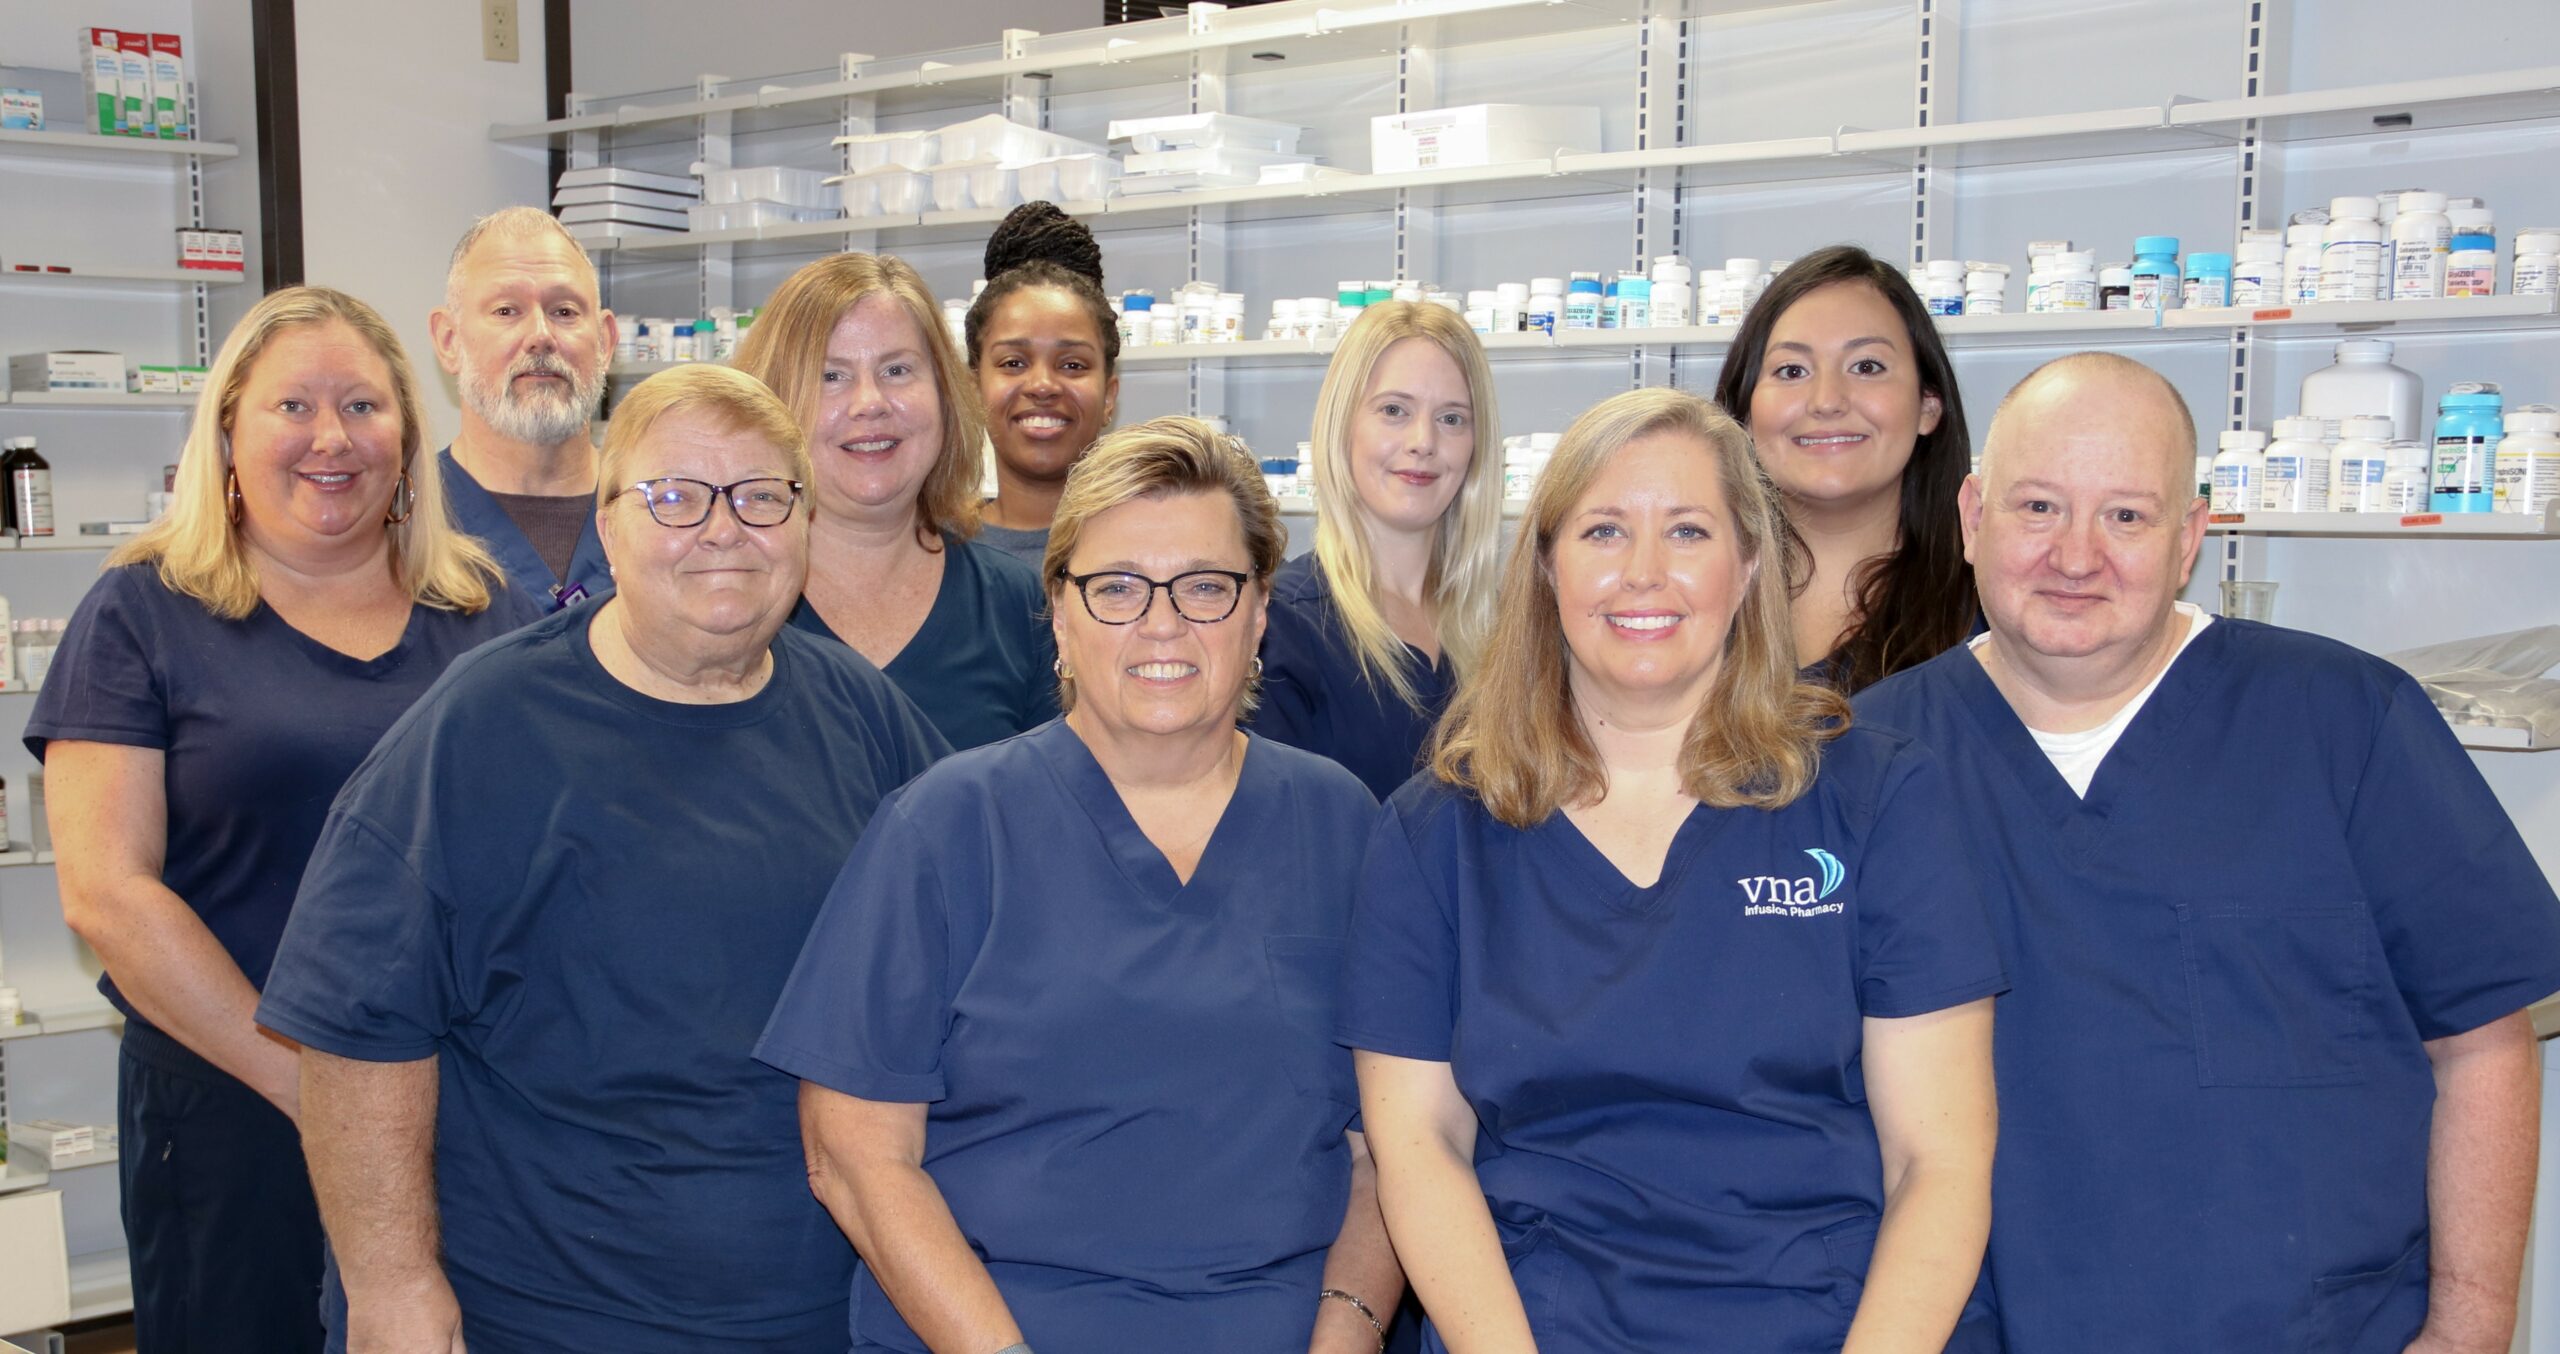 VNA pharmacy staff in scrubs smiling at camera